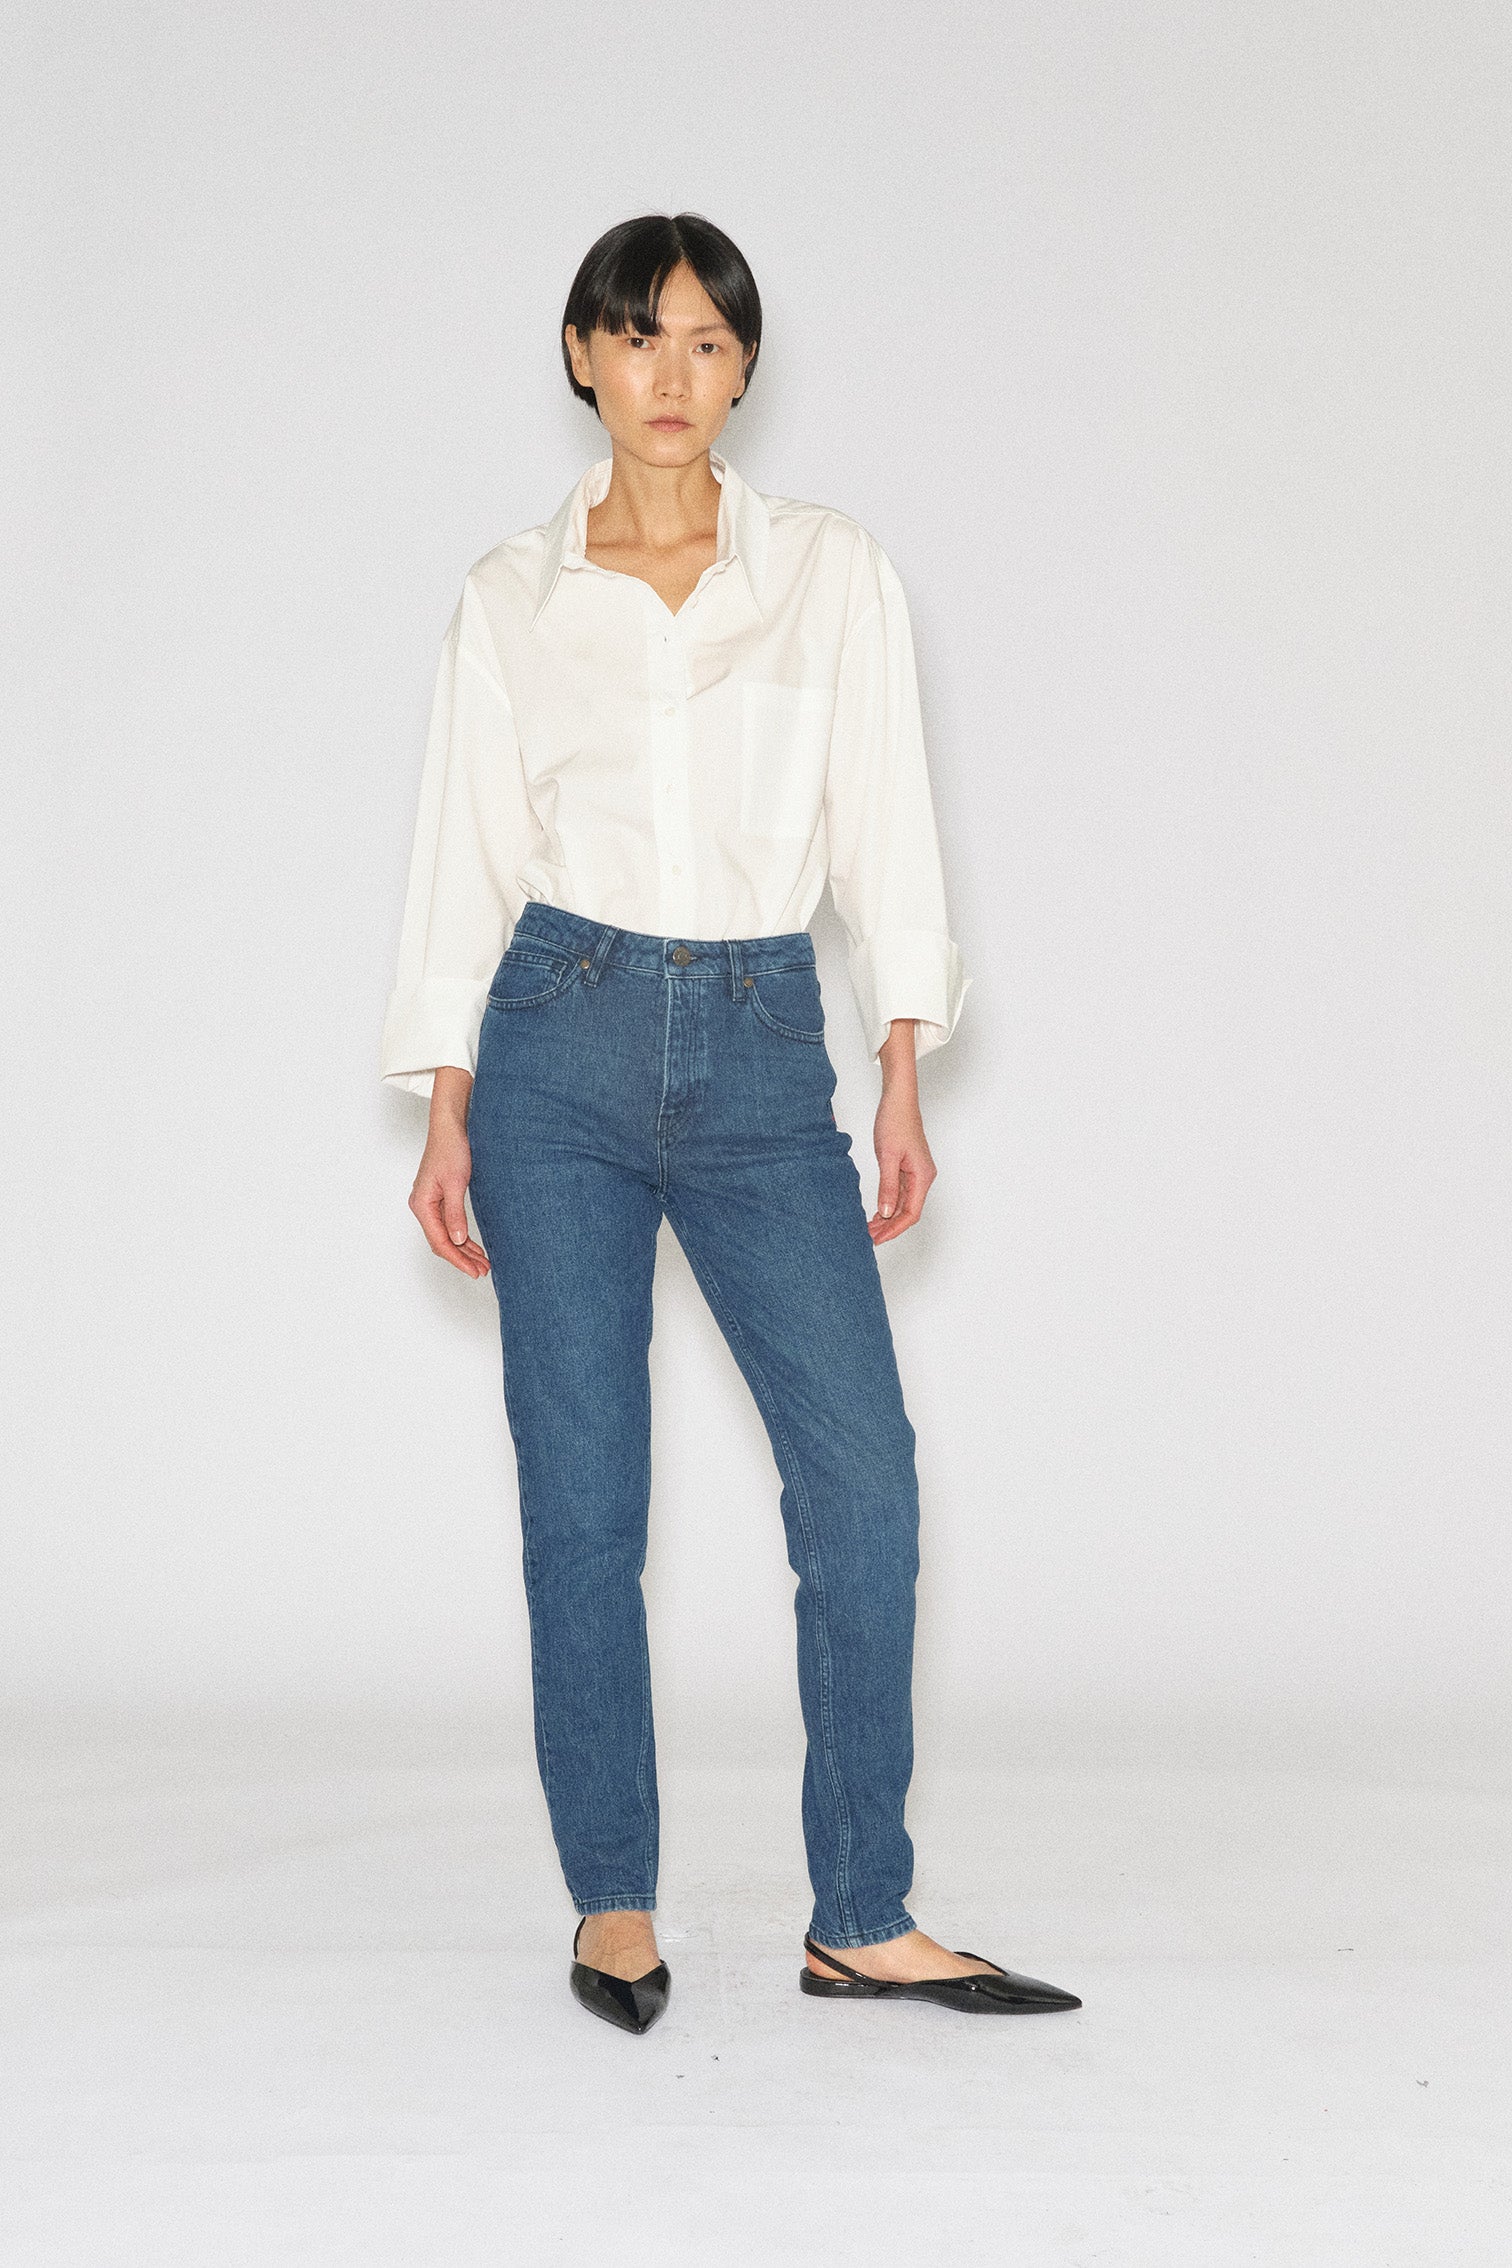 Tomorrow TMRW Hepburn Jeans - Perugia Original Jeans & Pants 51 Denim Blue